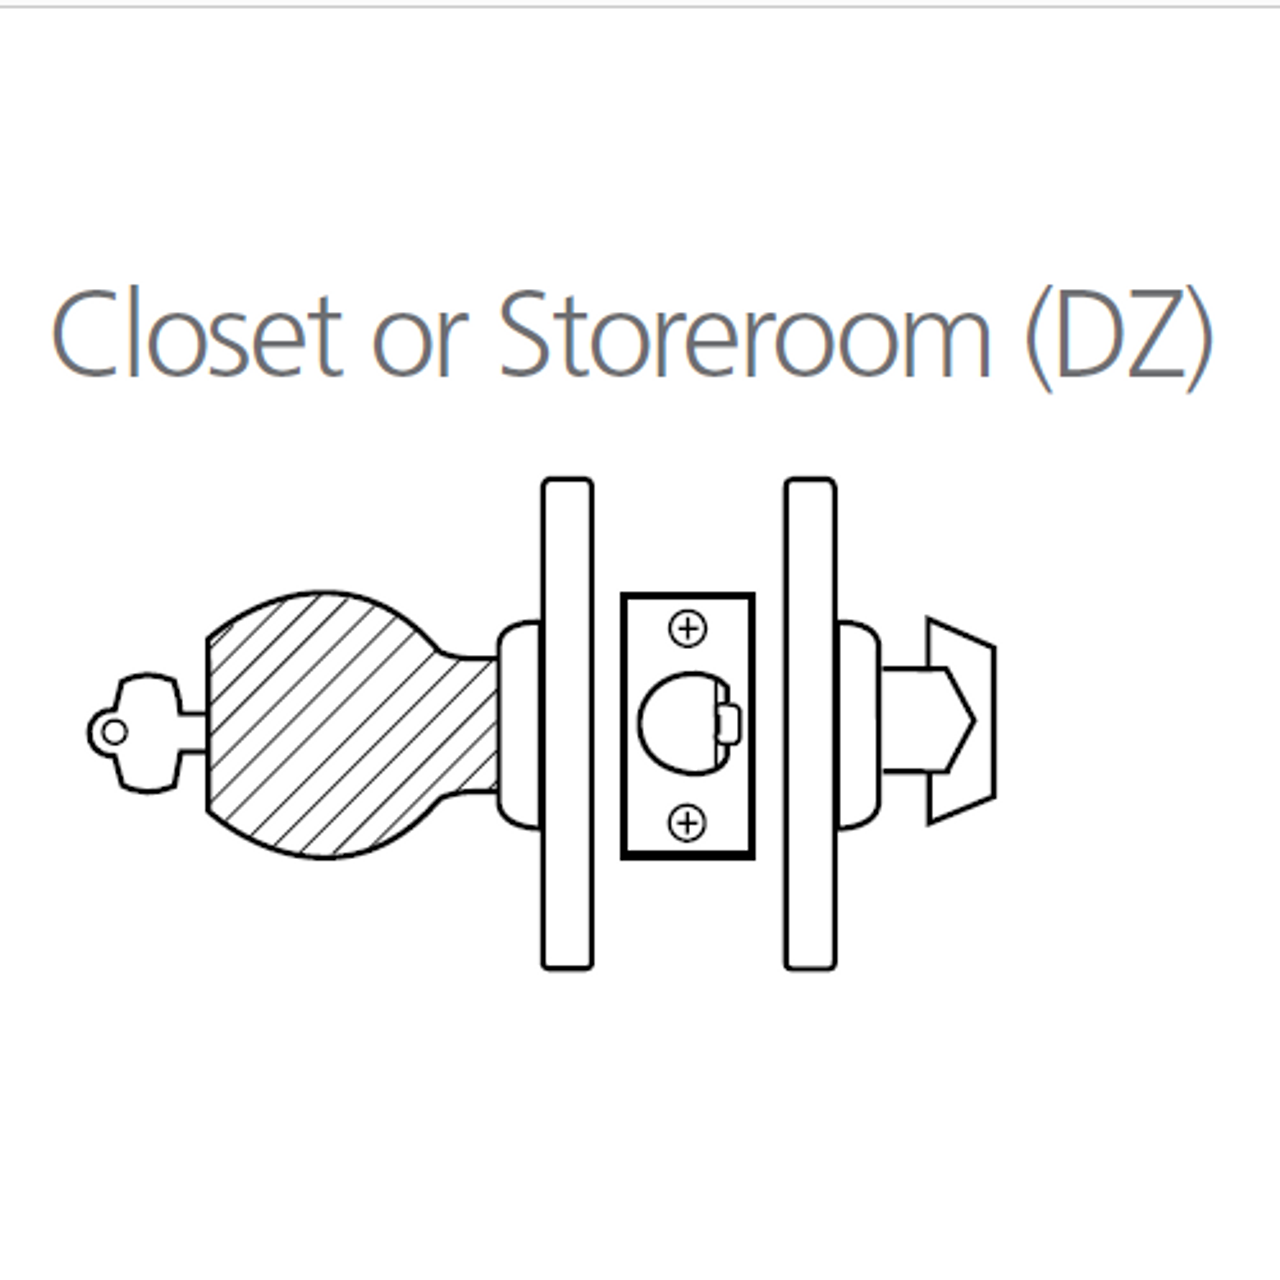 8K57DZ6DS3626 Best 8K Series Closet or Storeroom Heavy Duty Cylindrical Knob Locks with Tulip Style in Satin Chrome